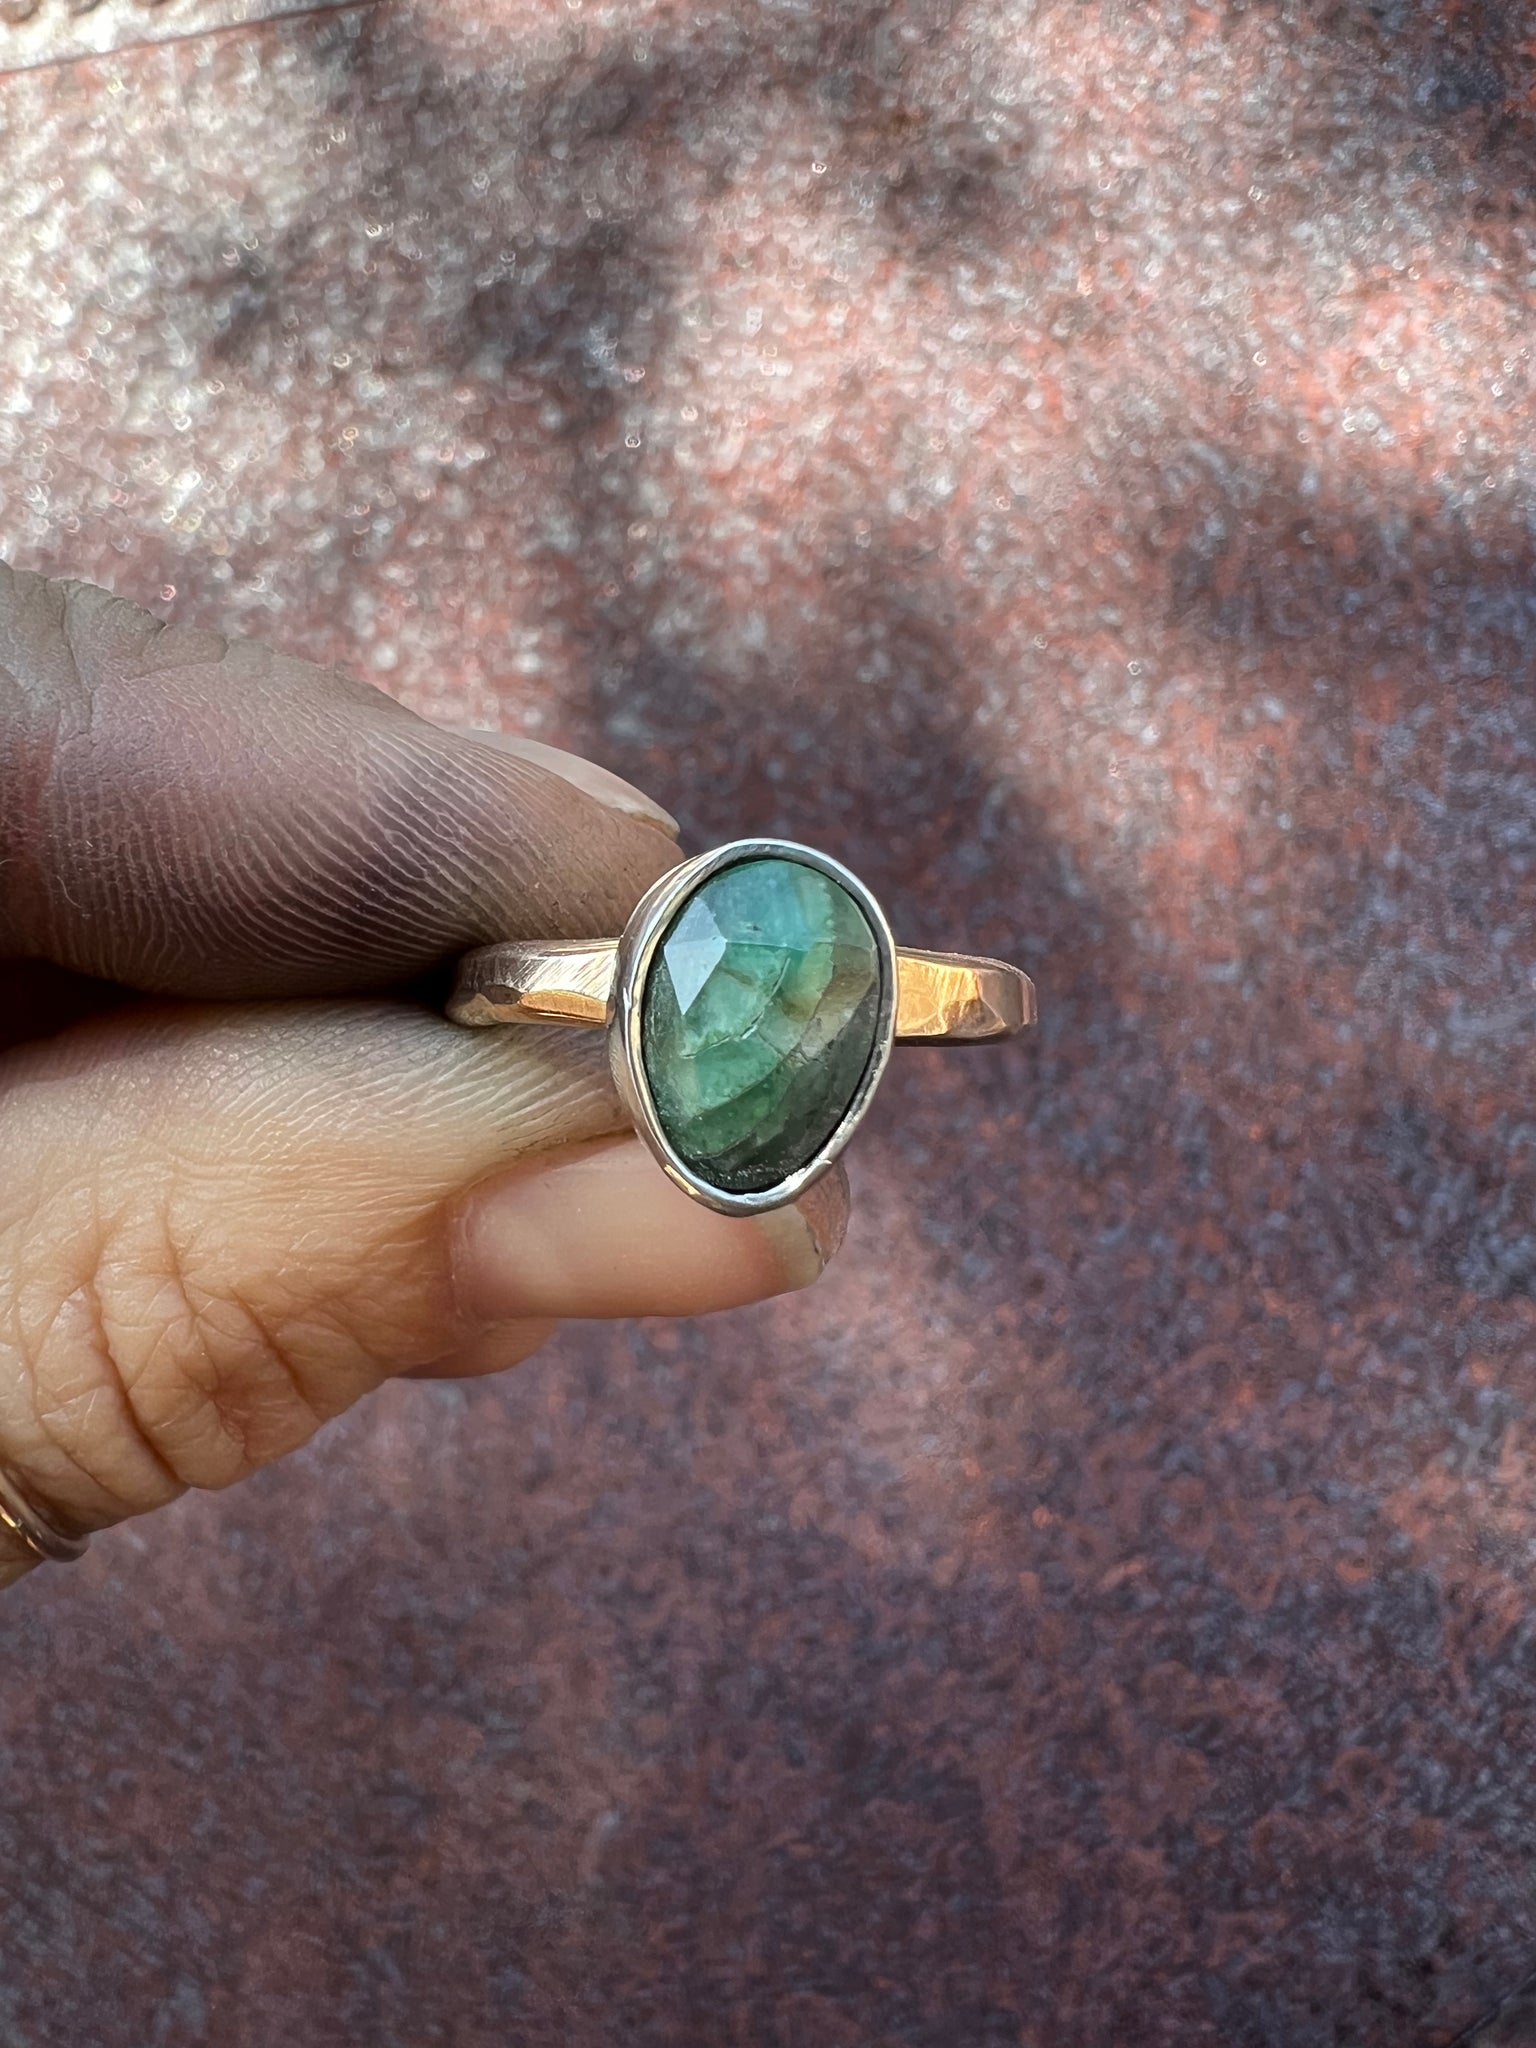 Brazilian Emerald ring — size 6.5